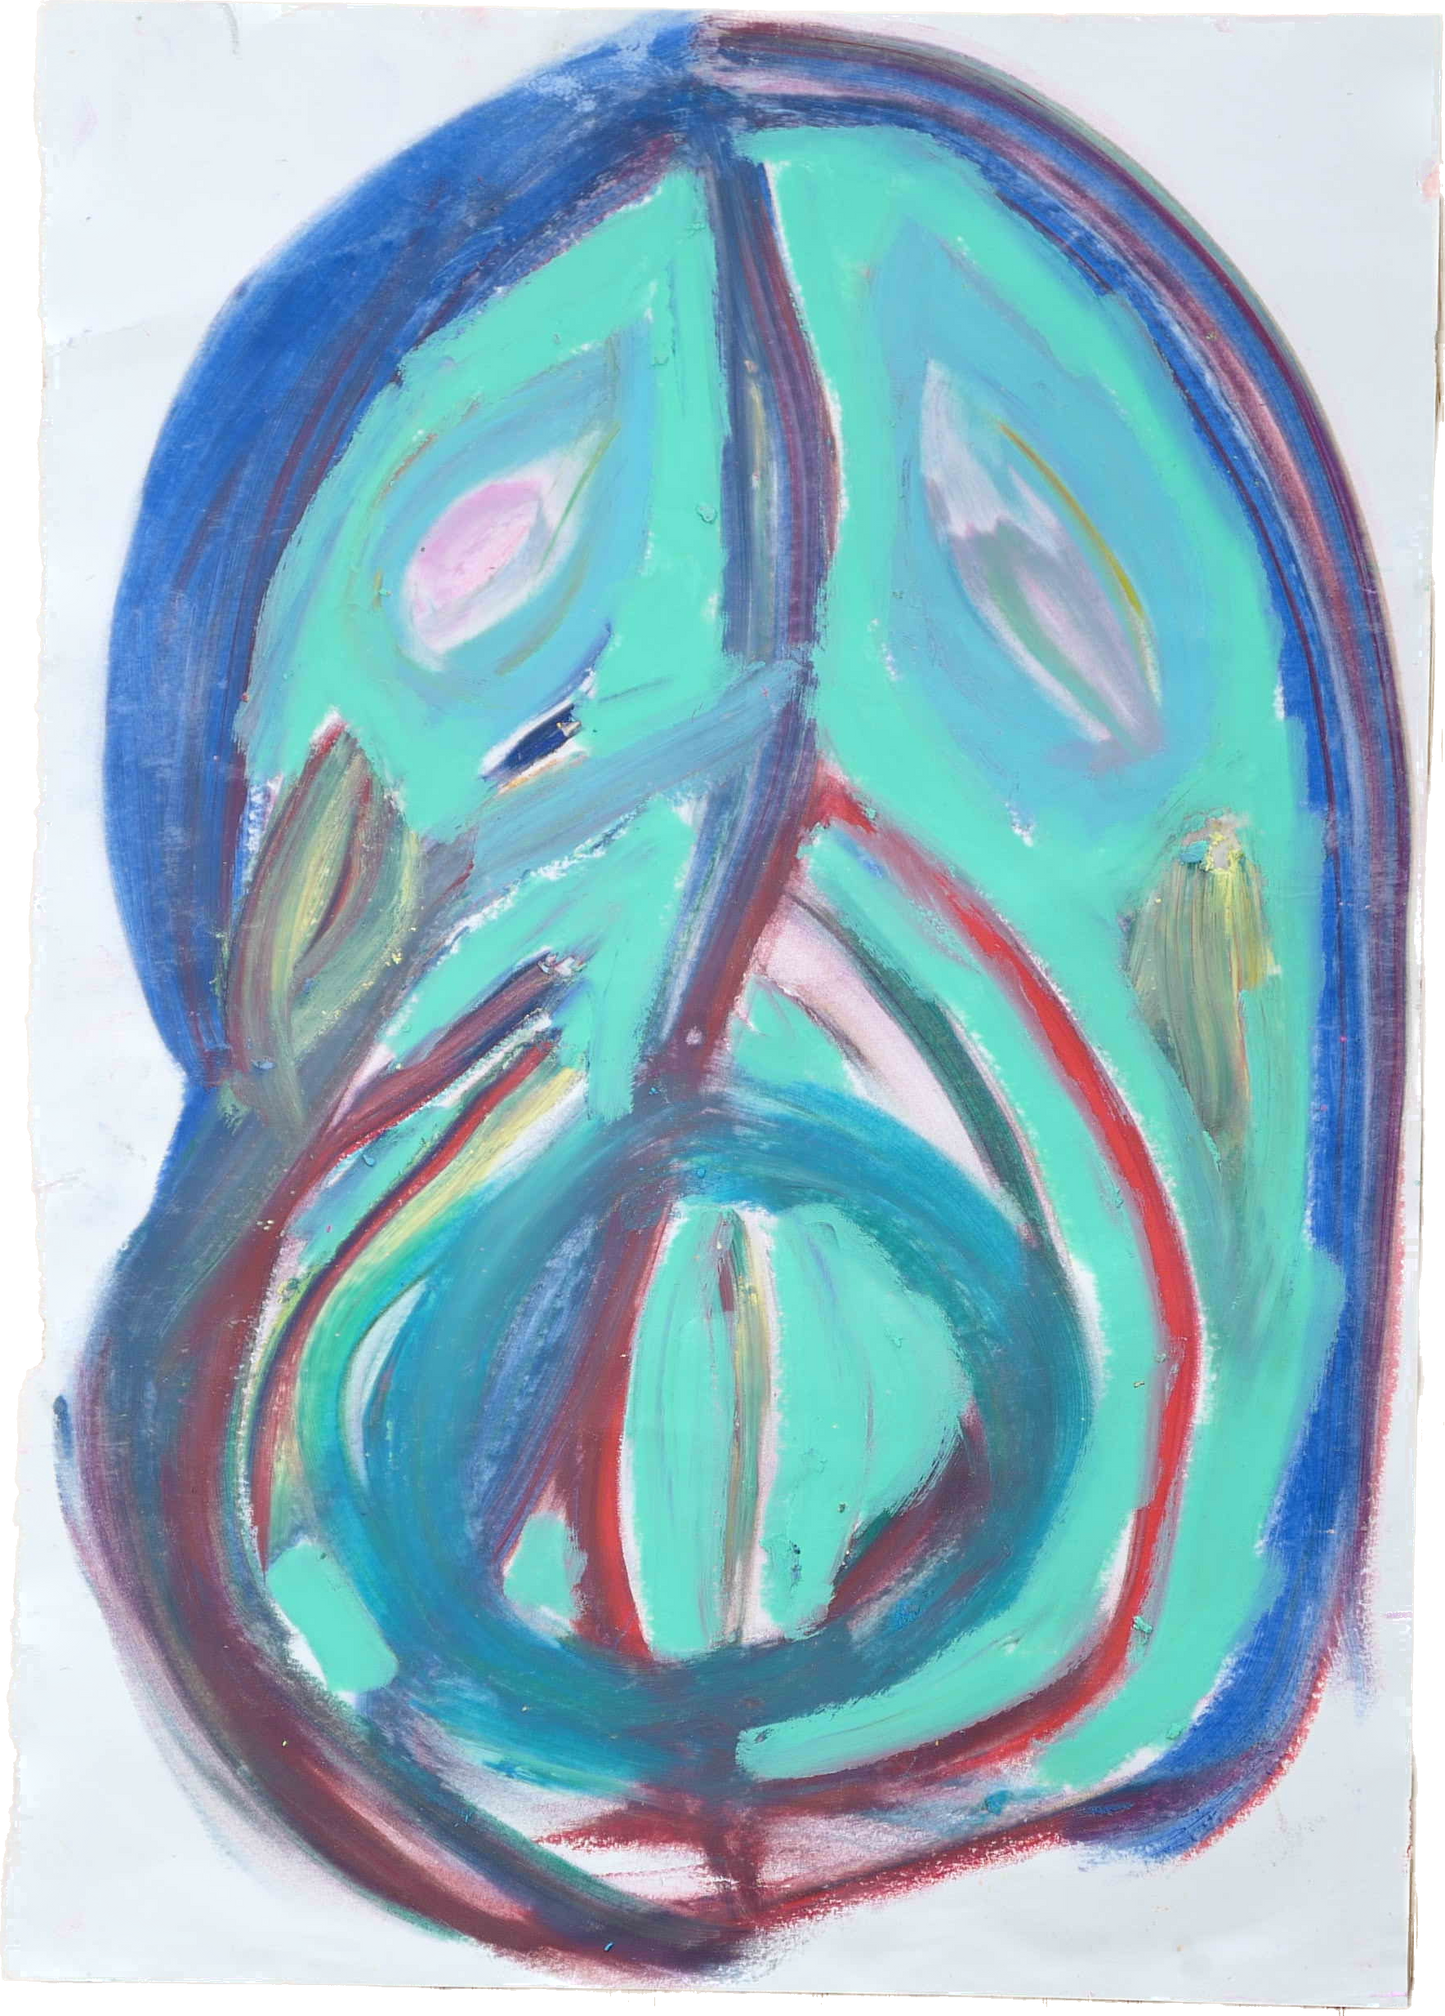 Lenfantvivant chromatic abstract meditation" "Sauna Meditation art piece No. 129" "Harmonious abstract art by Lenfantvivant" "Meditative gestural painting on paper" "Lenfantvivant's emotive color exploration"